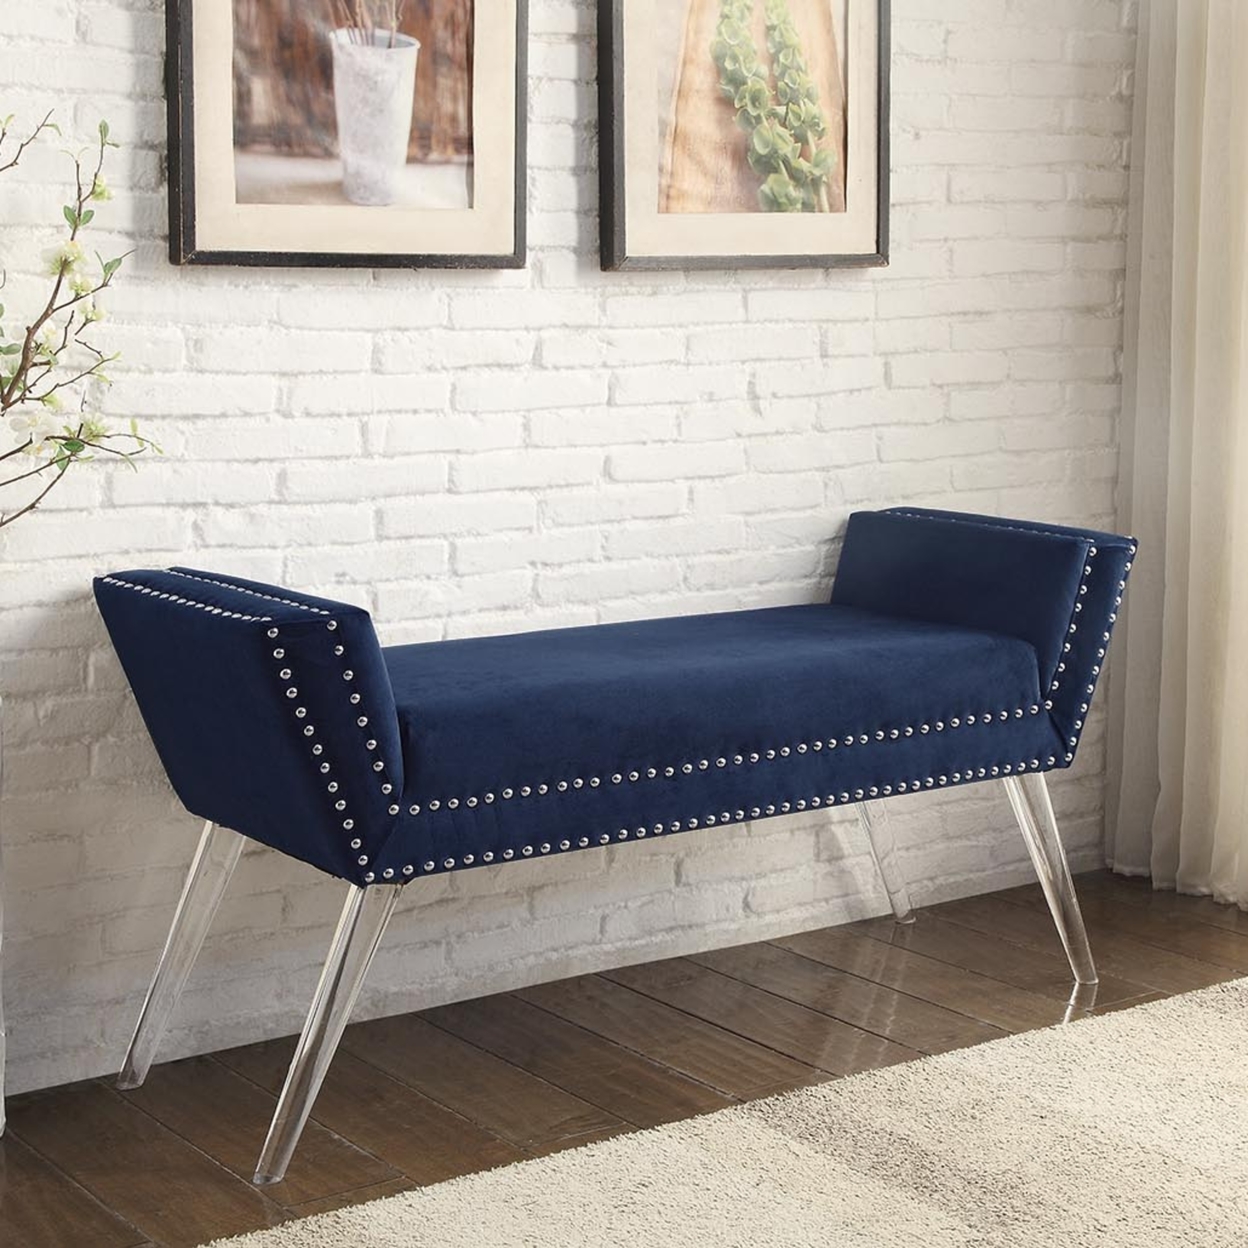 Dhyan Velvet Upholstered Bench-Modern Acrylic Legs-Nailhead Trim-Living-room, Entryway, Bedroom - Black